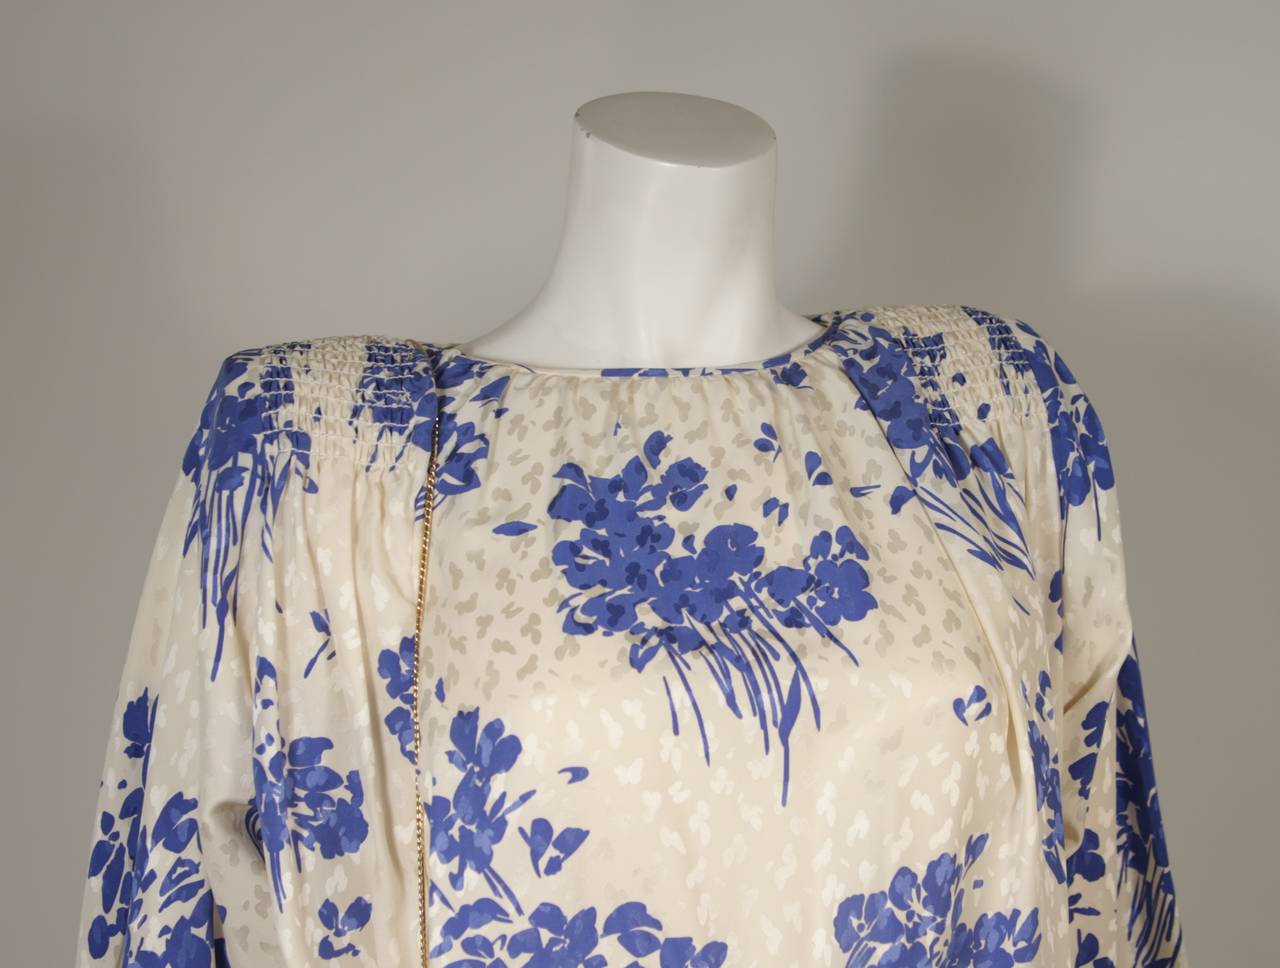 Galanos Silk Dress with Matching Embellished Judith Leiber Purse Size 2-4 1